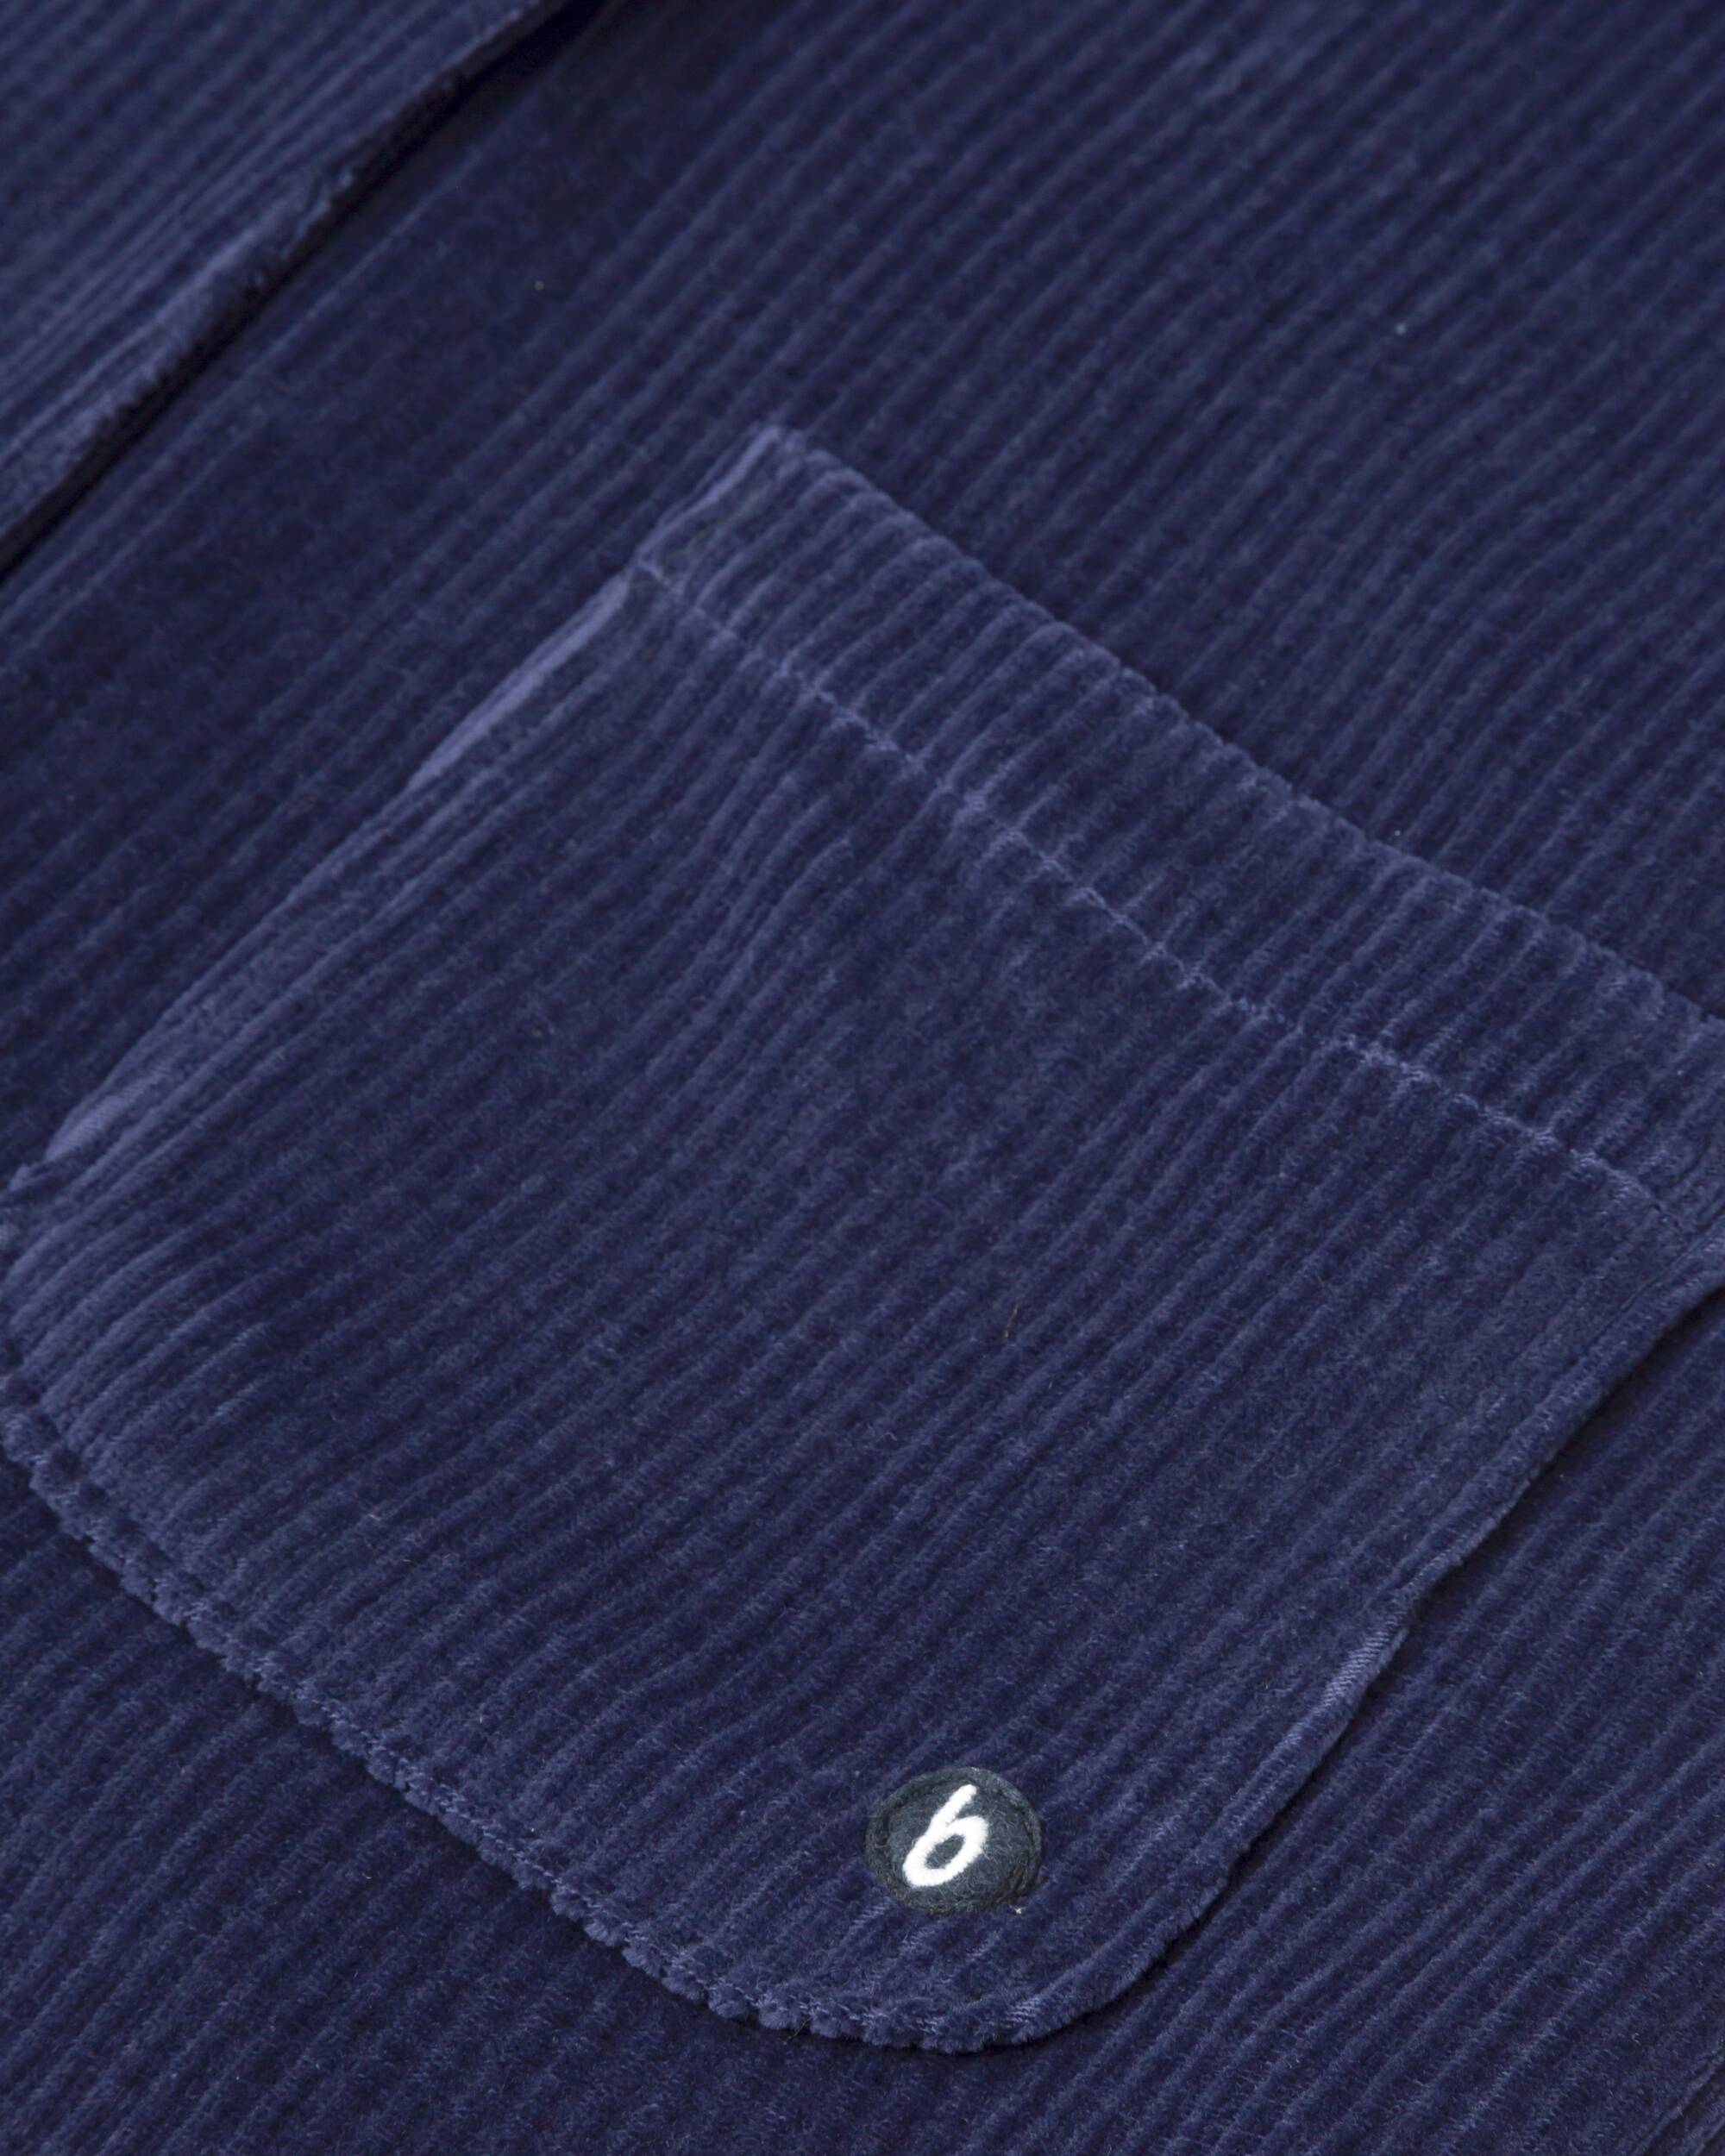 Corduroy blazer in blue made from 100% organic cotton from Brava Fabrics